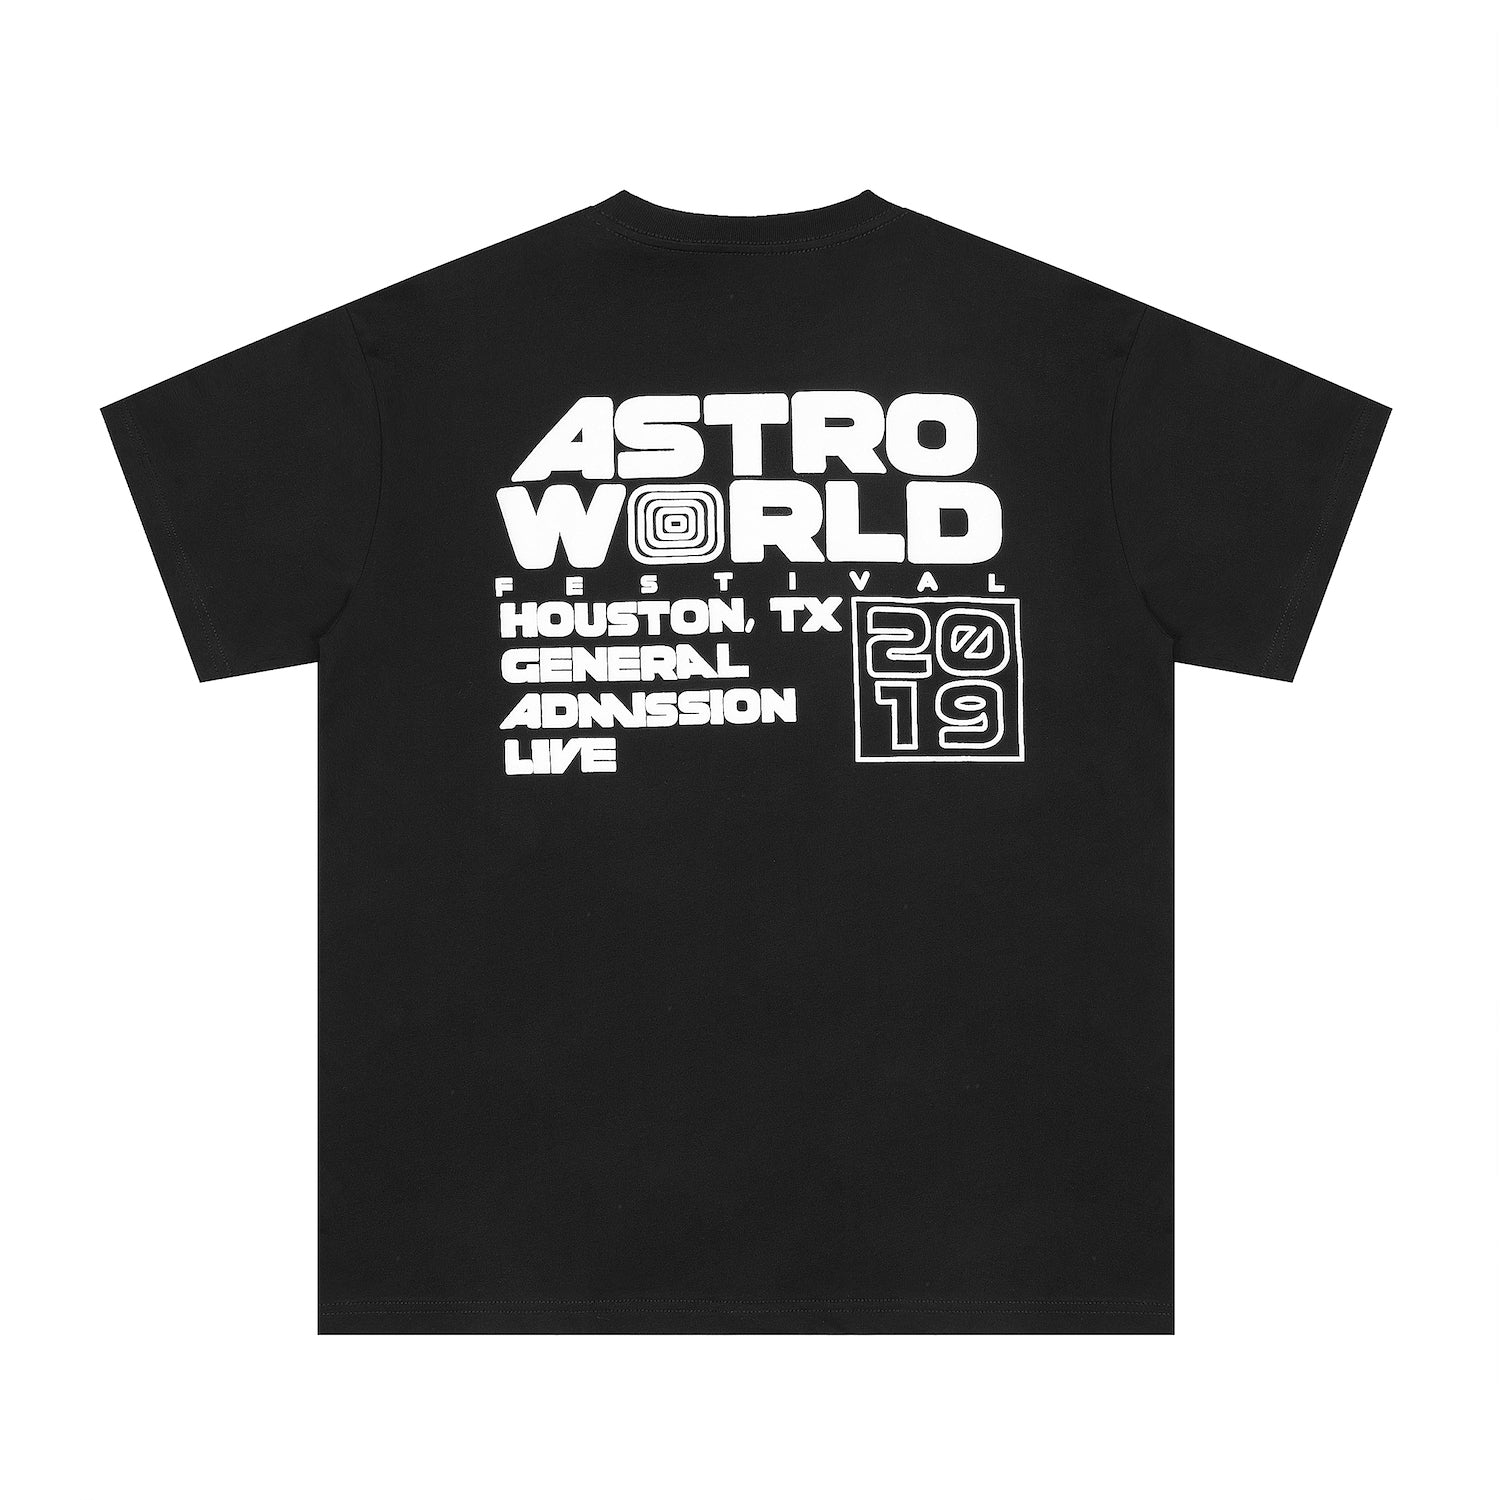 Utopia Clothing Travis Scott Astroworld T-Shirt XL / Vanilla